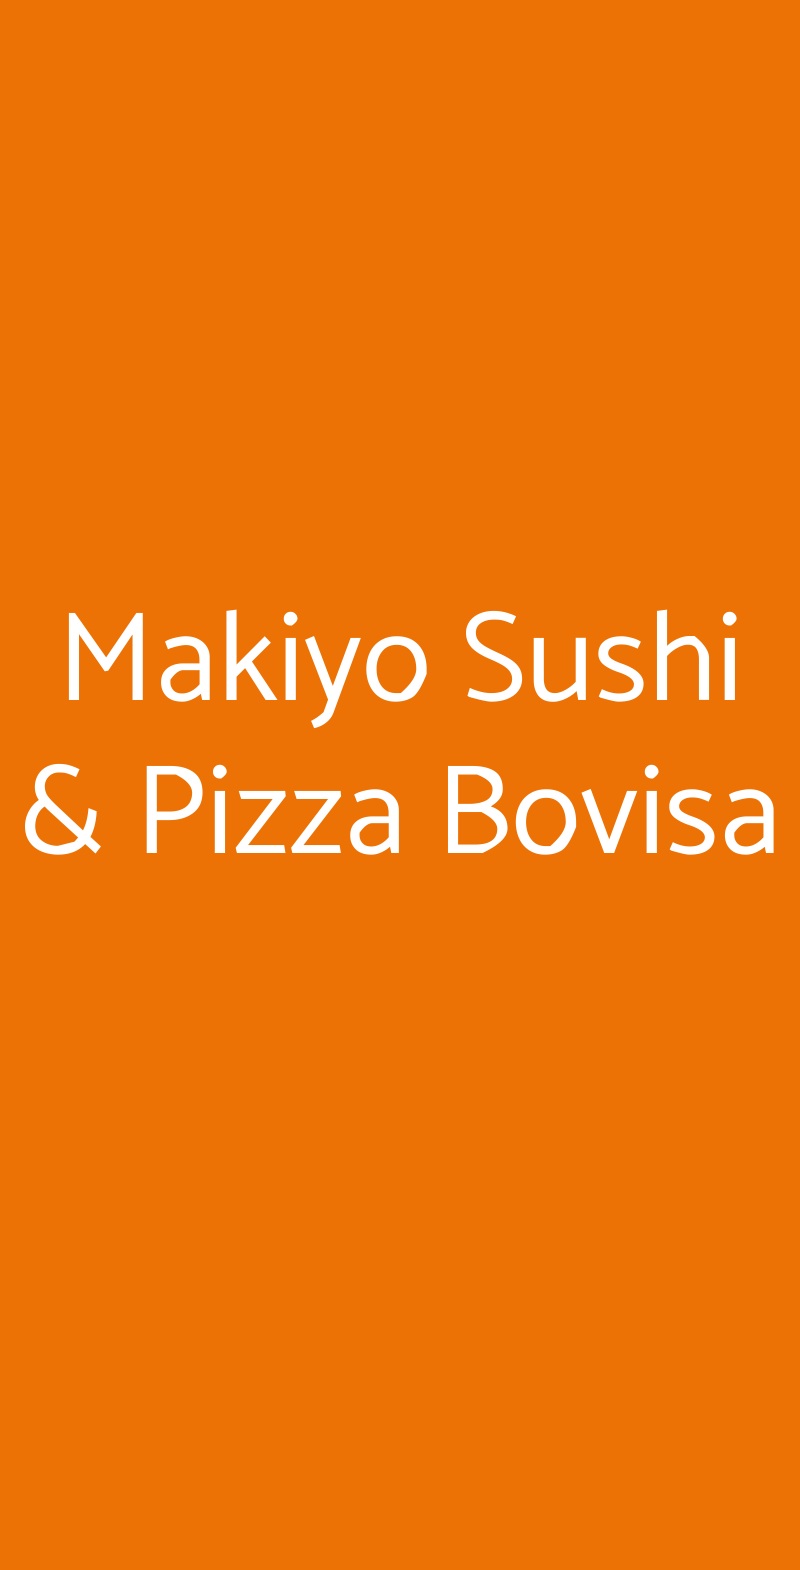 Makiyo Sushi & Pizza Bovisa Milano menù 1 pagina